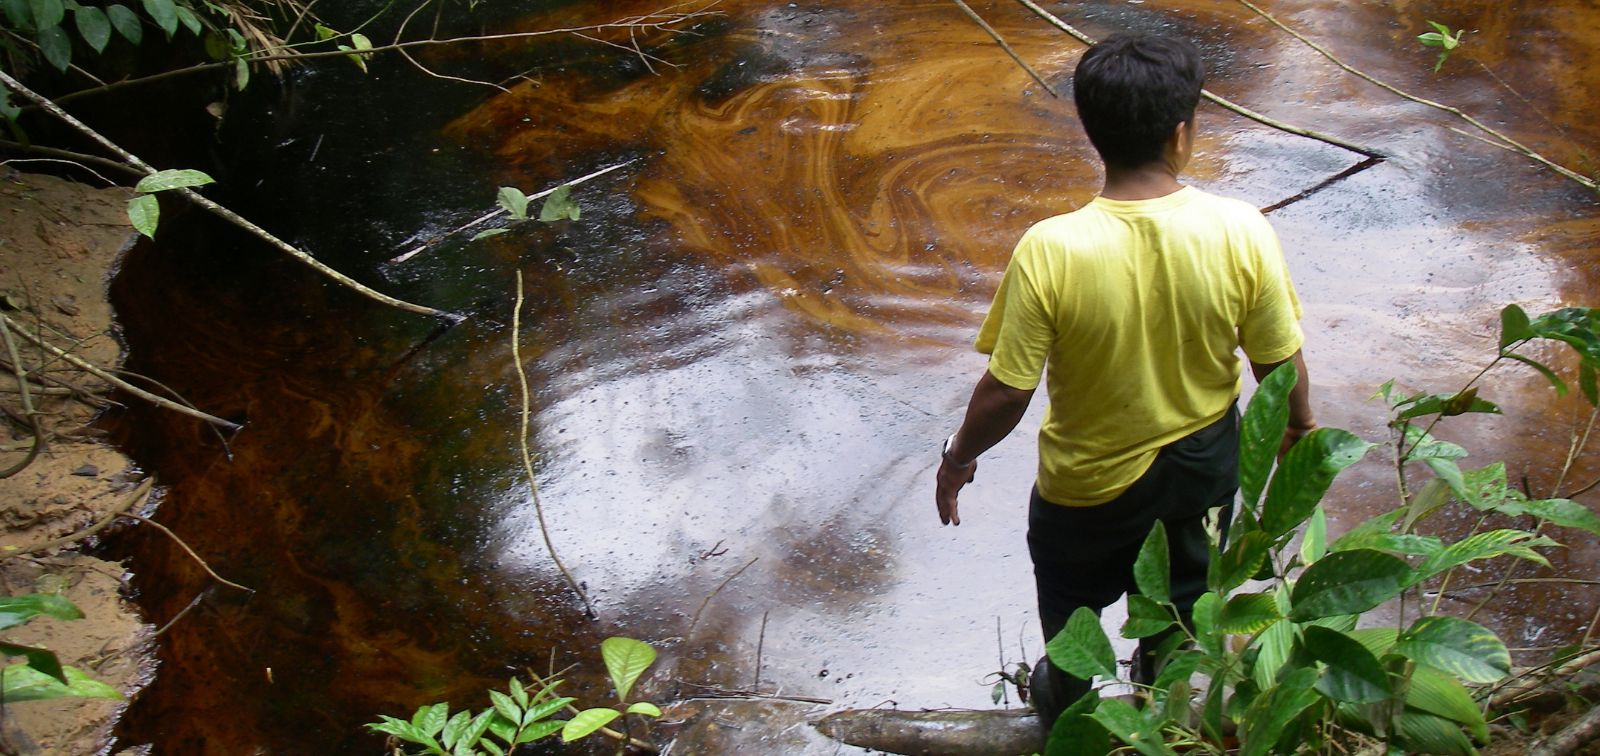 Amazonia petroleo metales indigenas